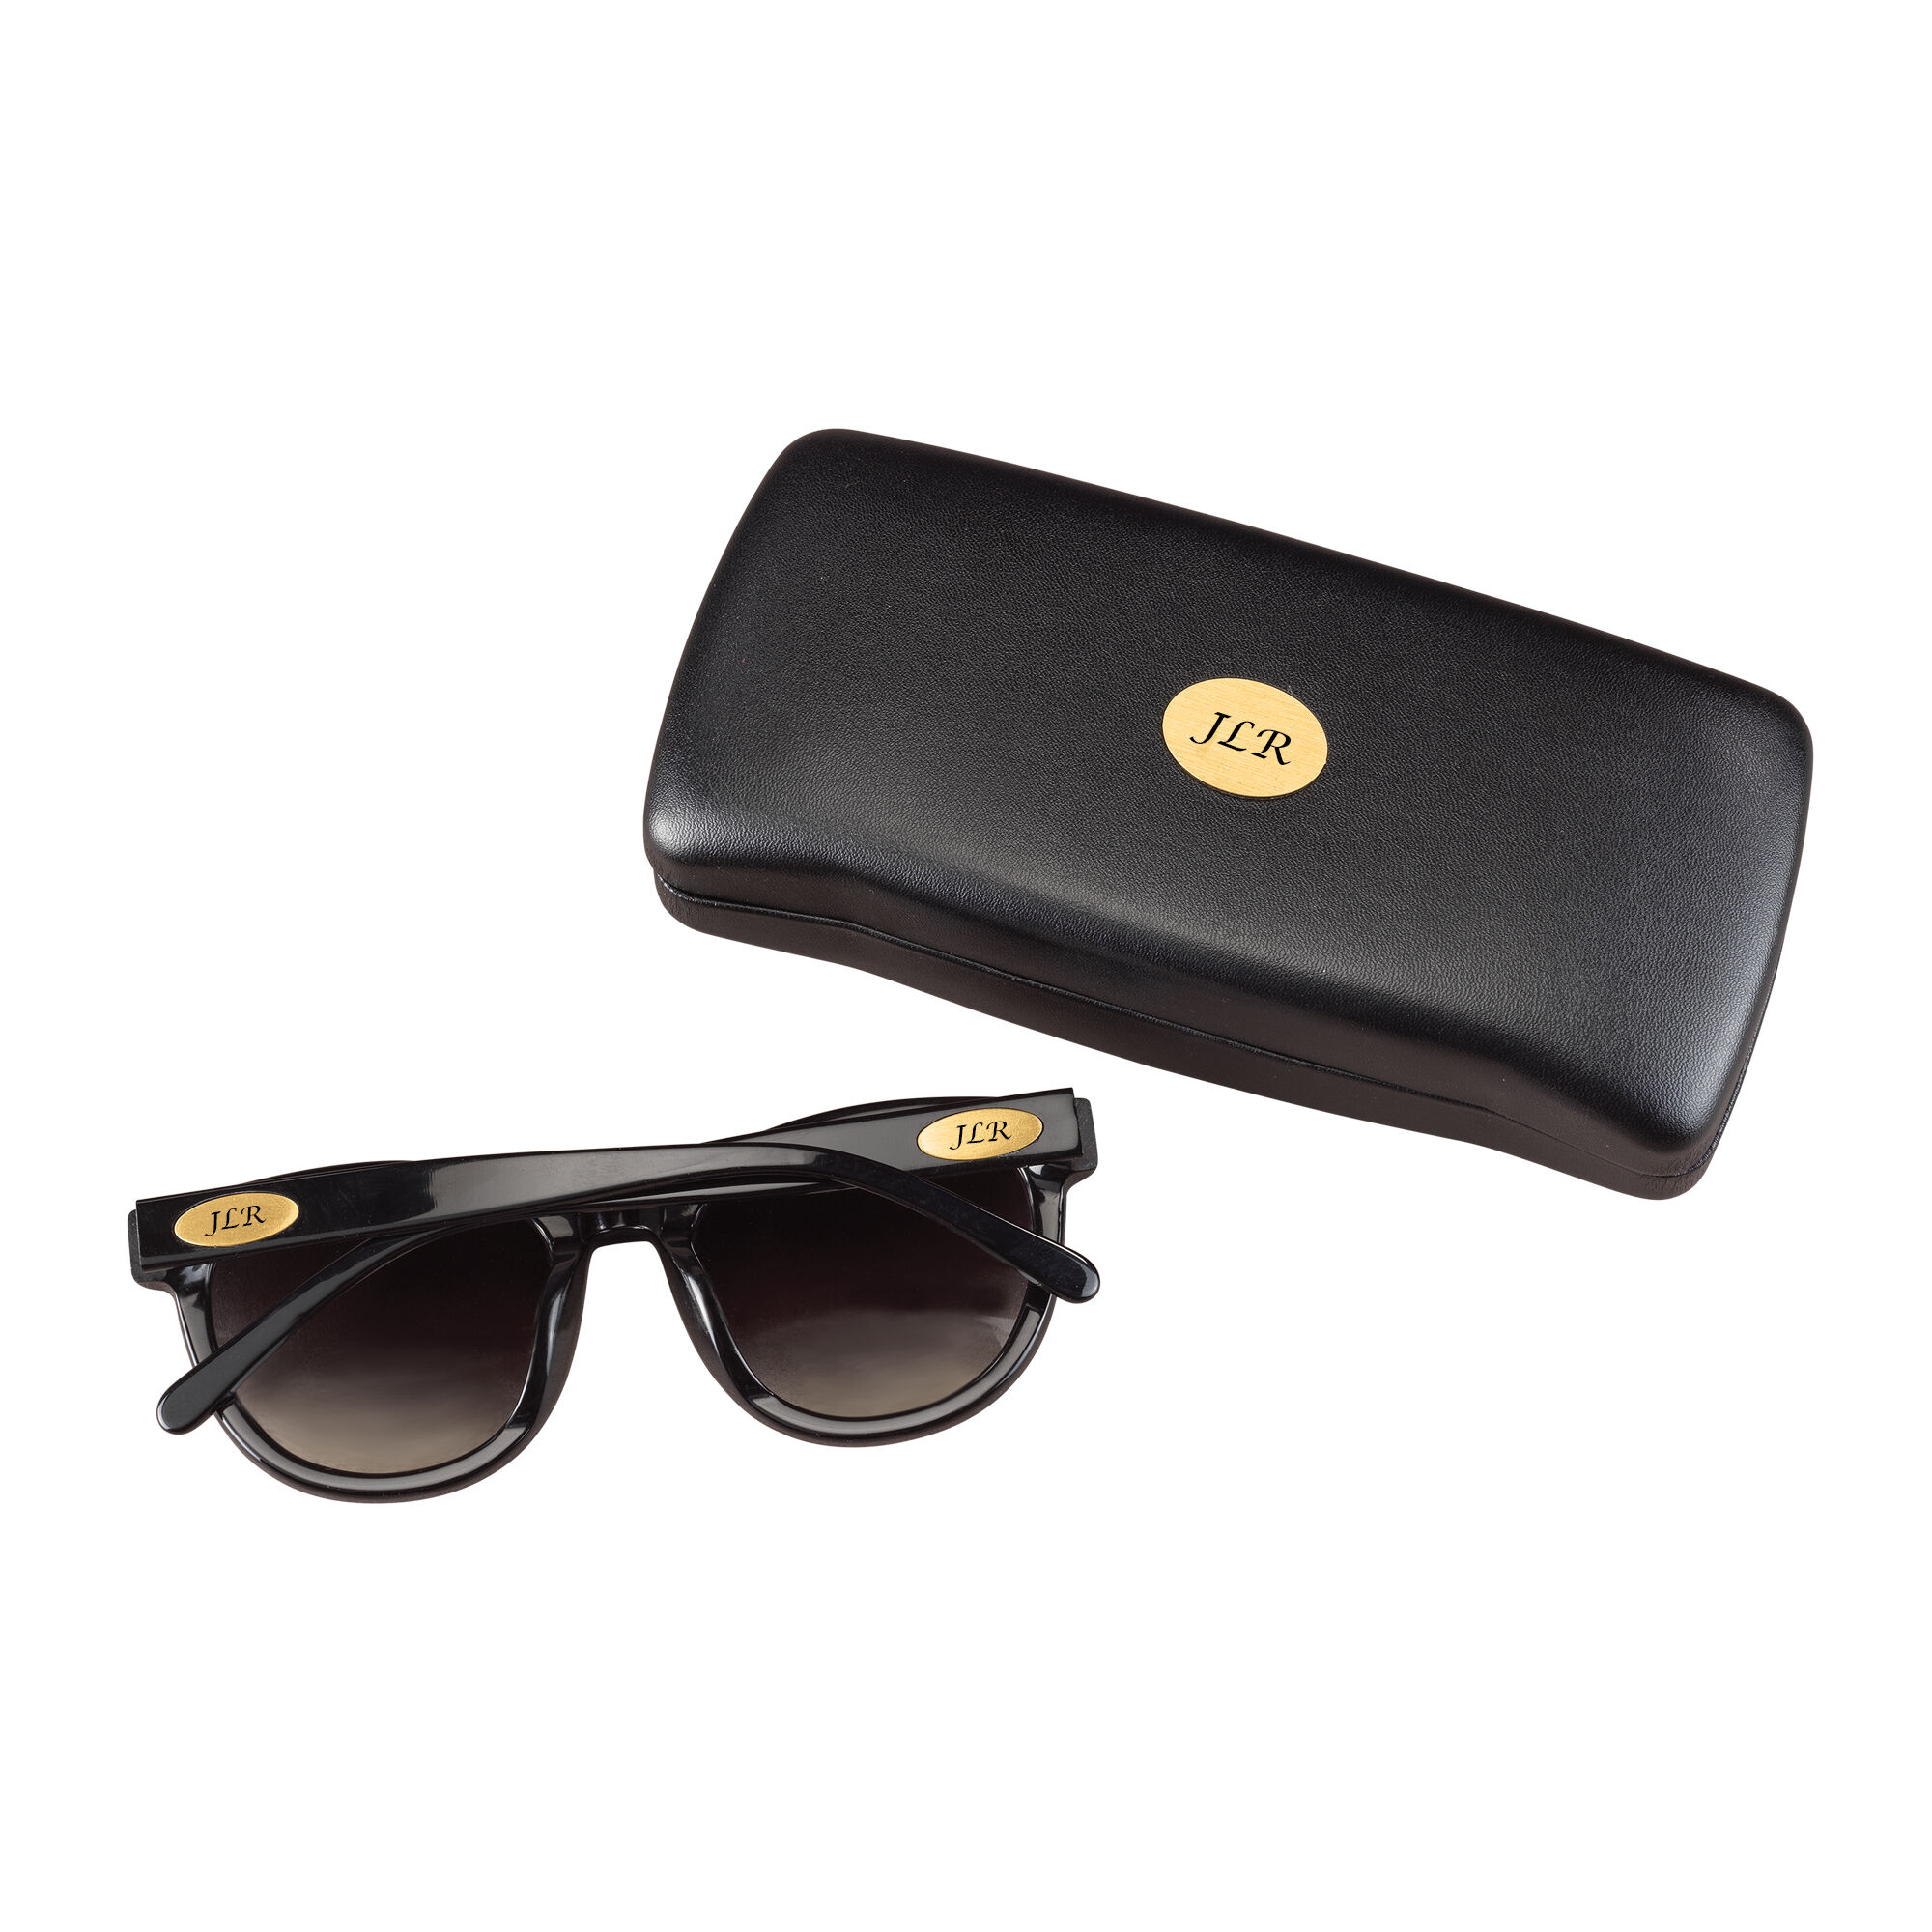 Personalized Glam Sunglasses 11298 0016 g giftbox